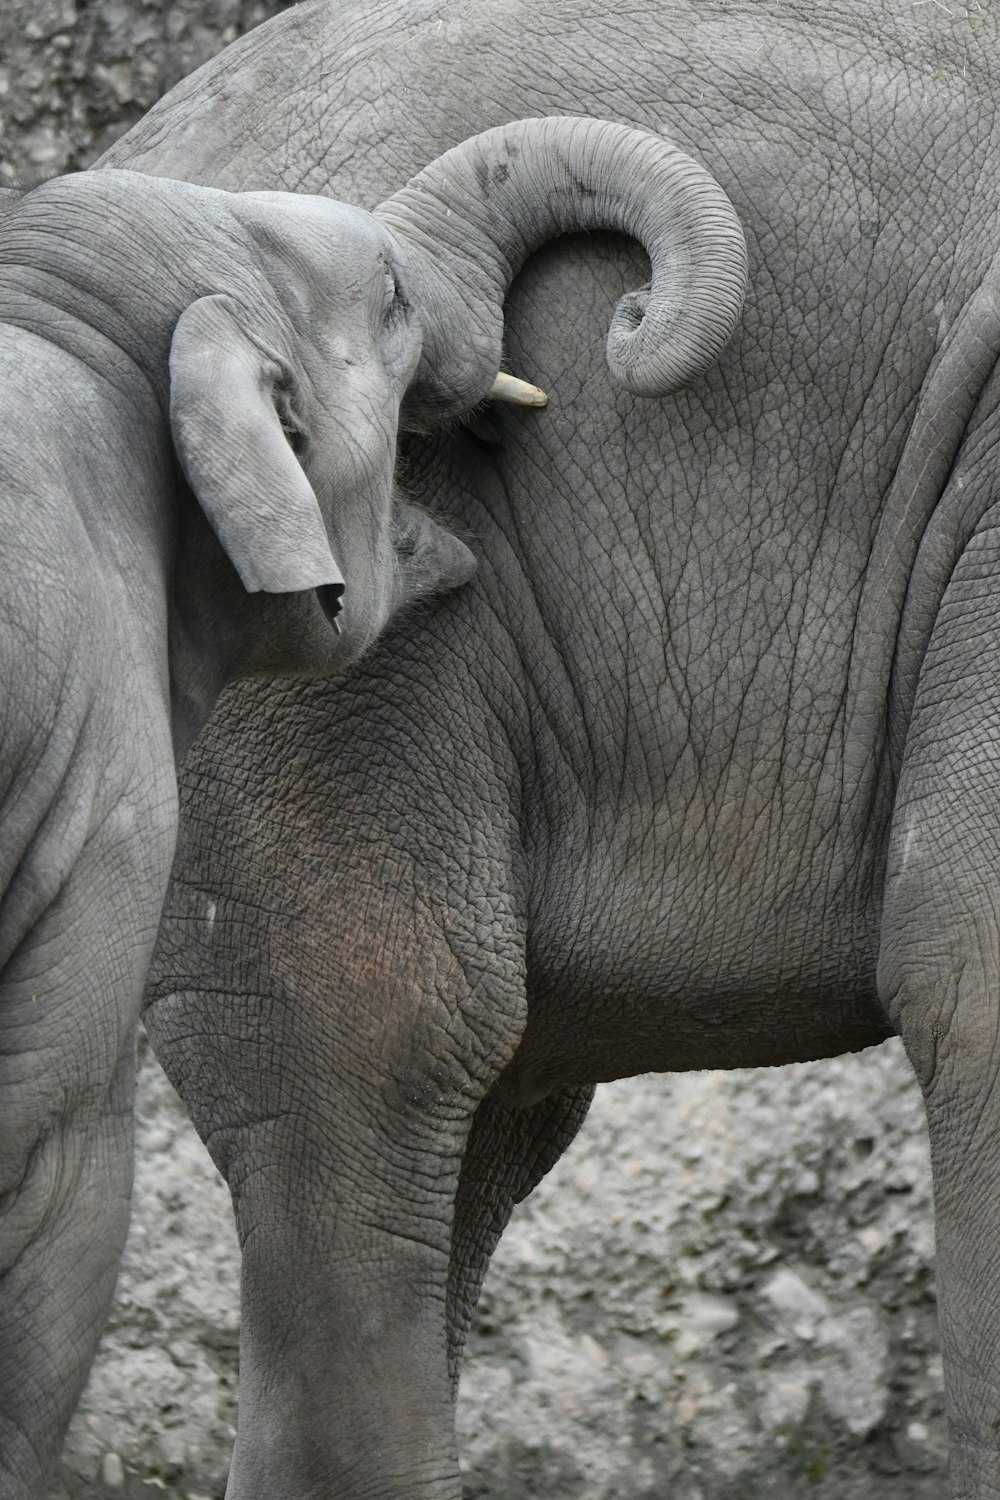 elephants with their trunks on each other